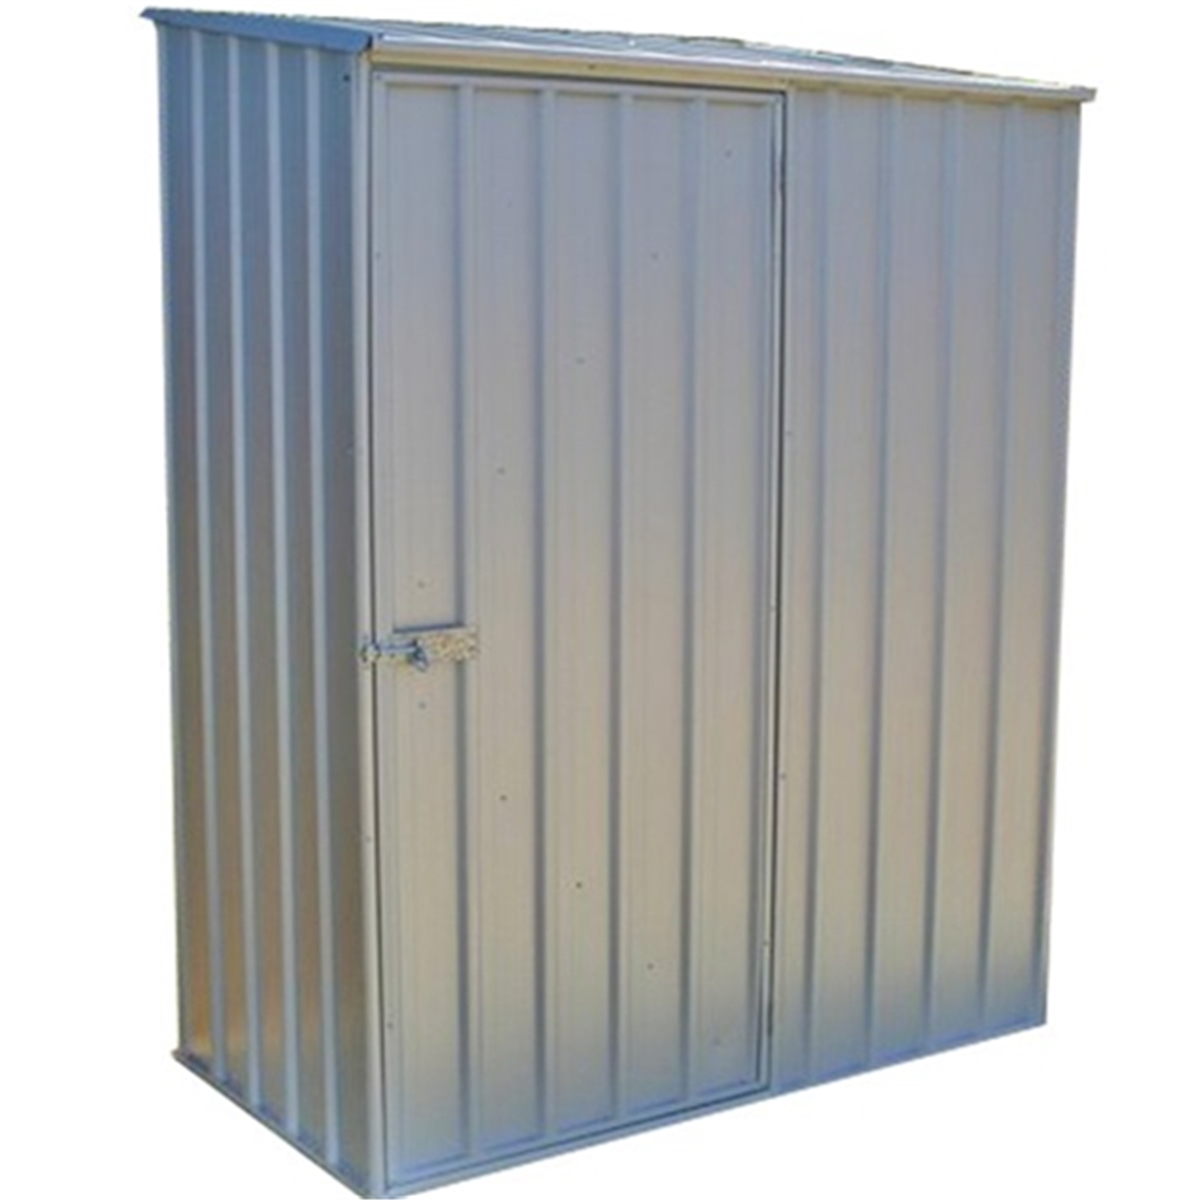 installed 5 x 3 space saver zinc metal shed 1.52m x 0.78m